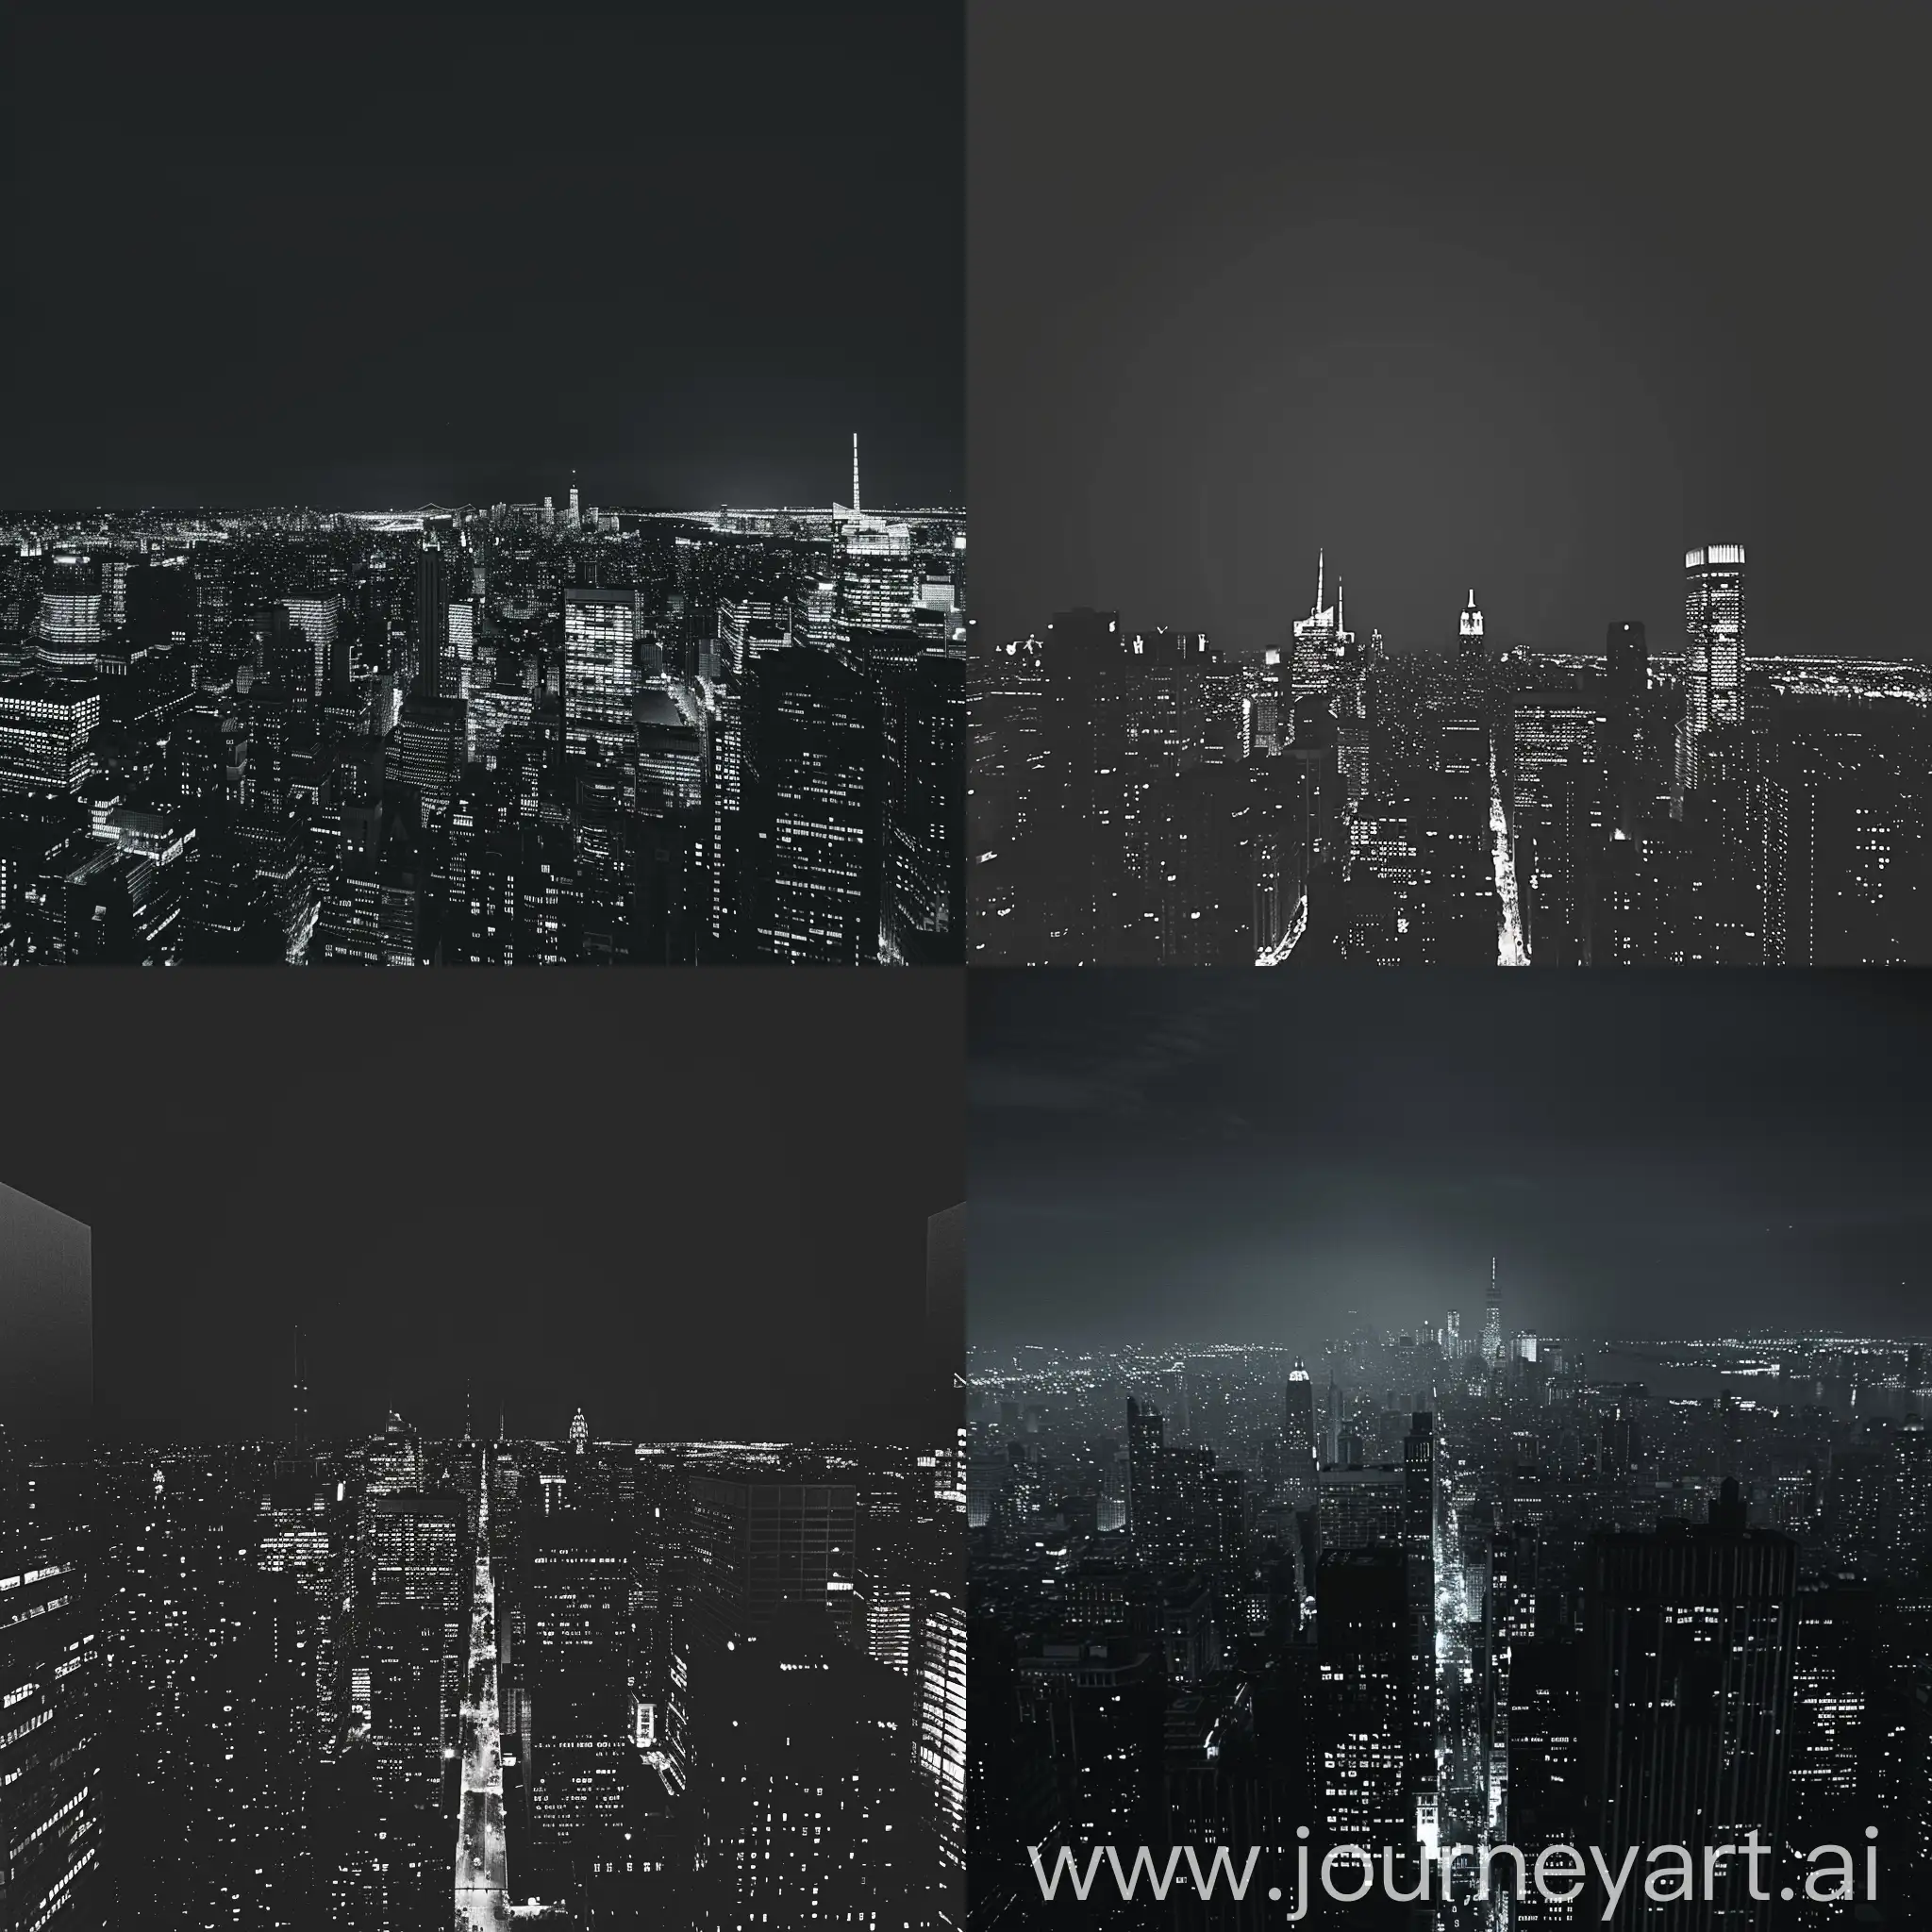 Urban-Nightscape-Monochrome-City-Skyline-with-Text-Space